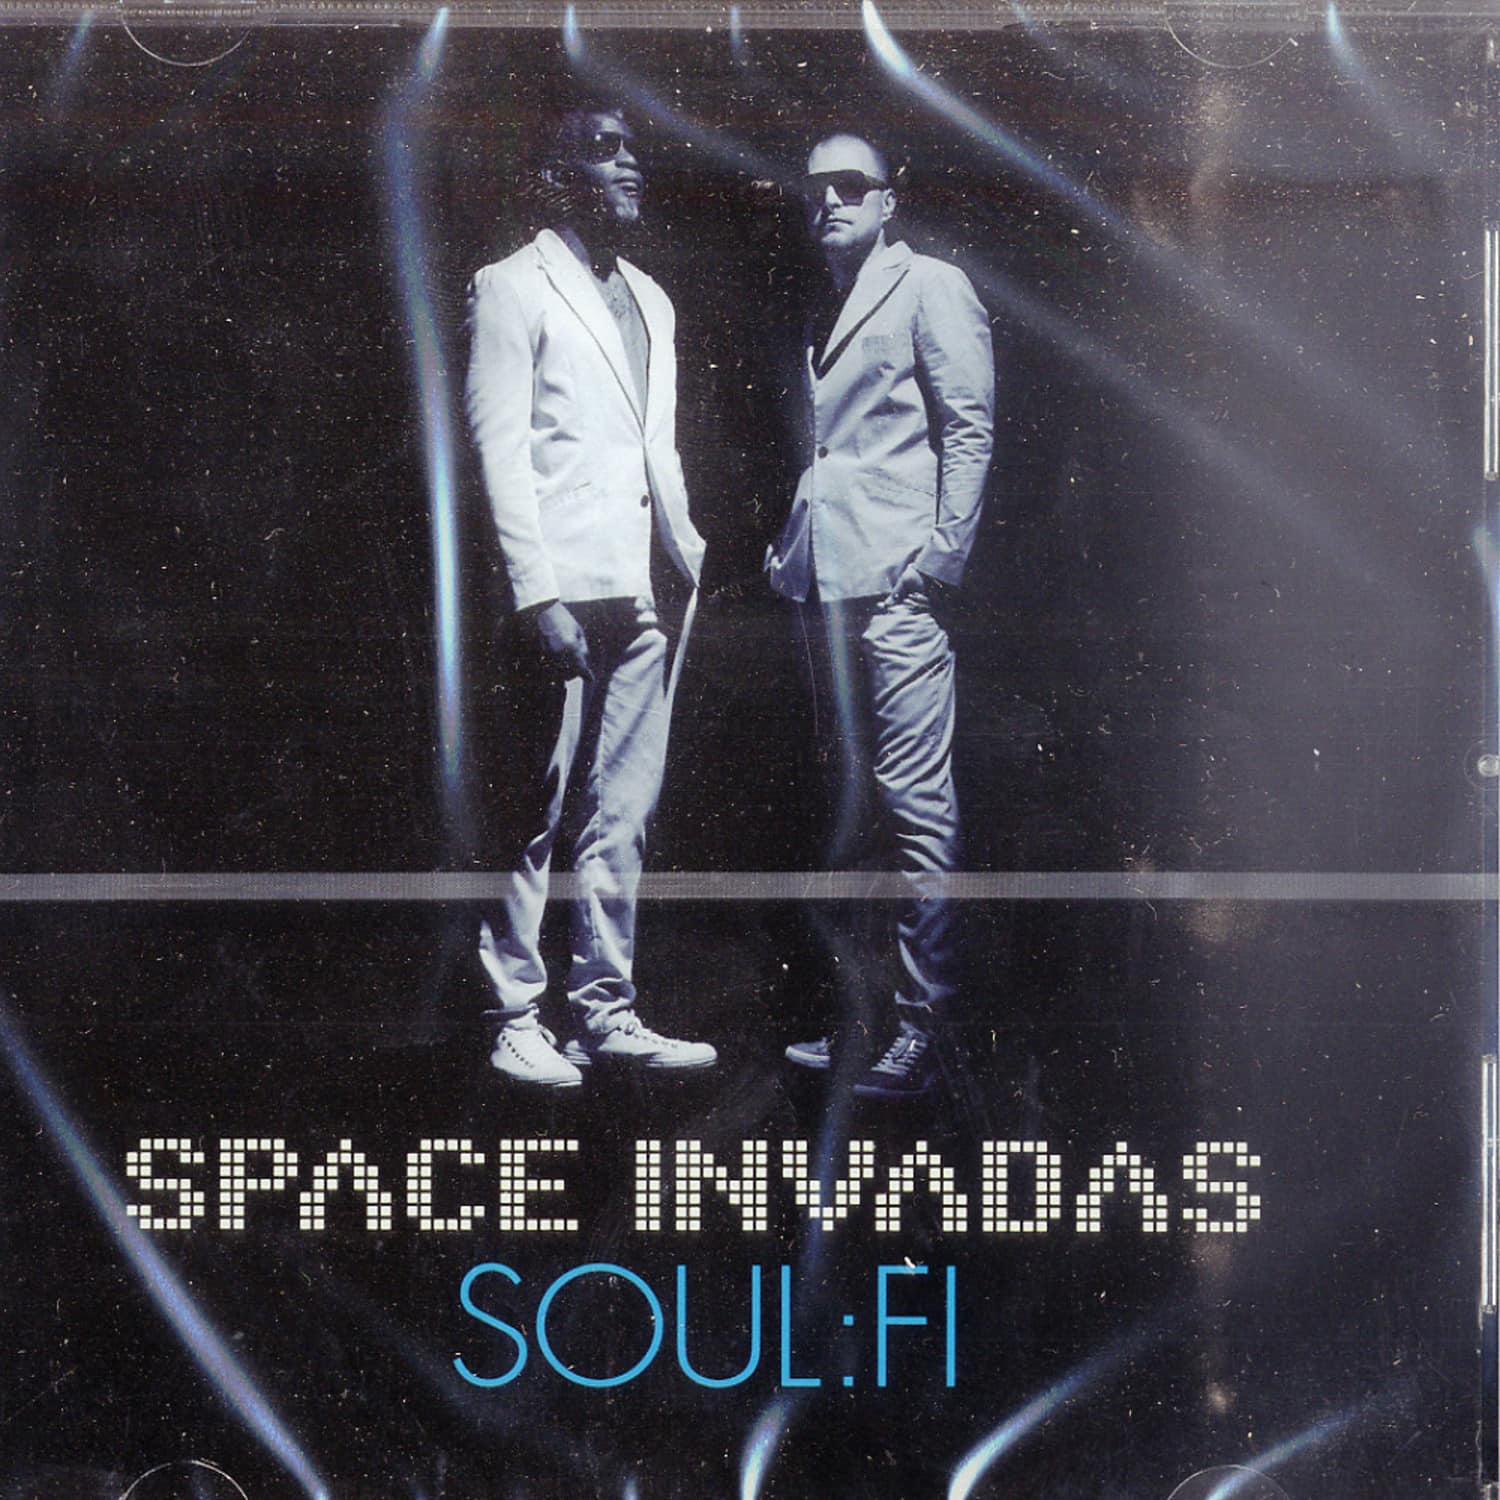 Space Invadas - SOUL:FI 